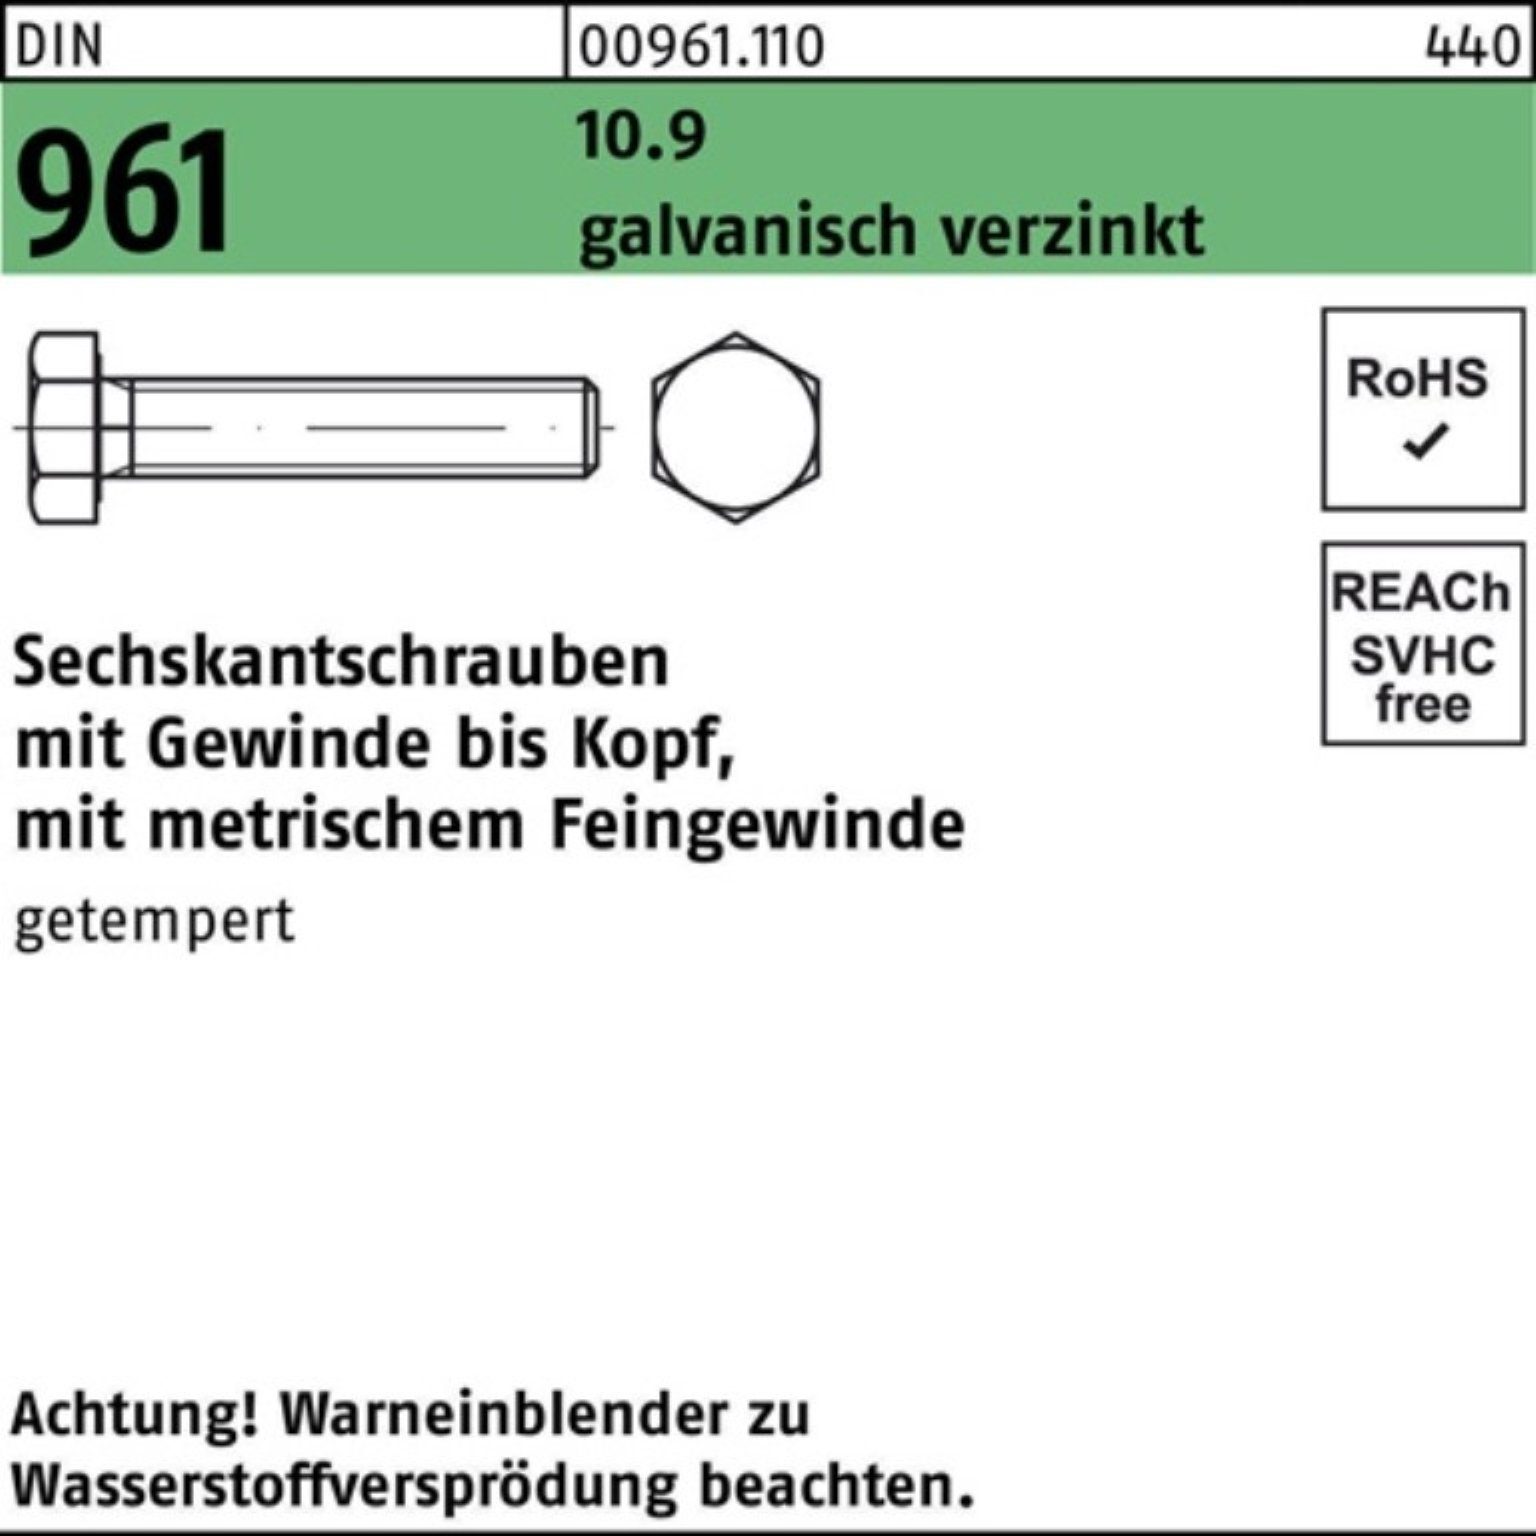 Reyher Sechskantschraube 200er Pack S M8x1x Sechskantschraube 200 35 VG 10.9 DIN galv.verz. 961